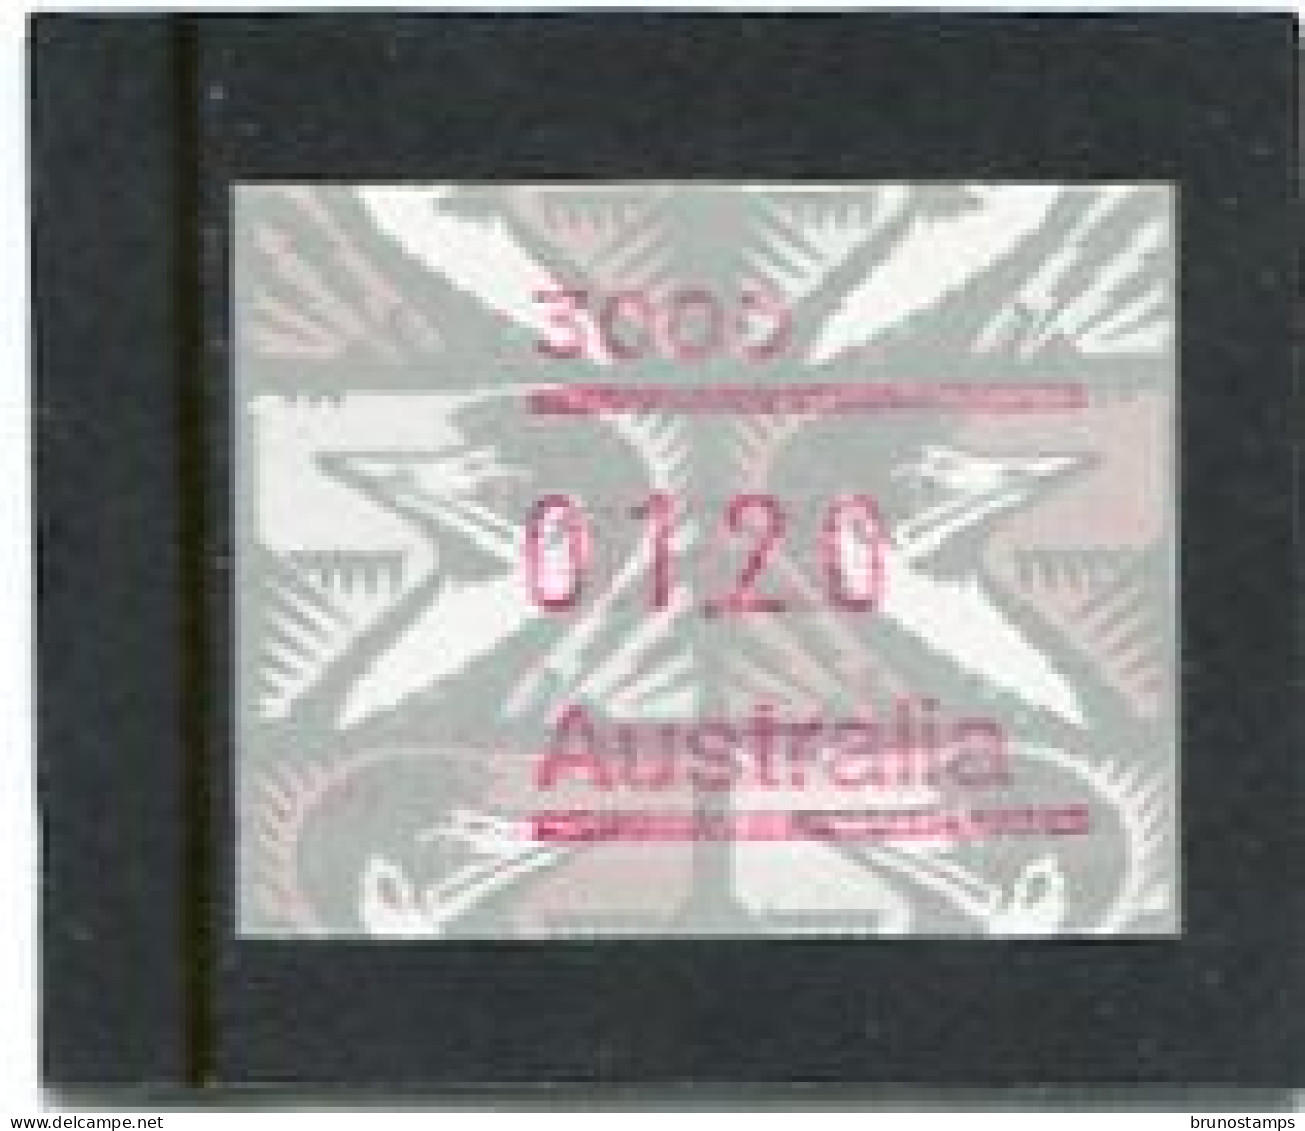 AUSTRALIA - 1992  1.20$  FRAMA  EMU  POSTCODE  3000  (MELBOURNE)  MINT NH - Automaatzegels [ATM]